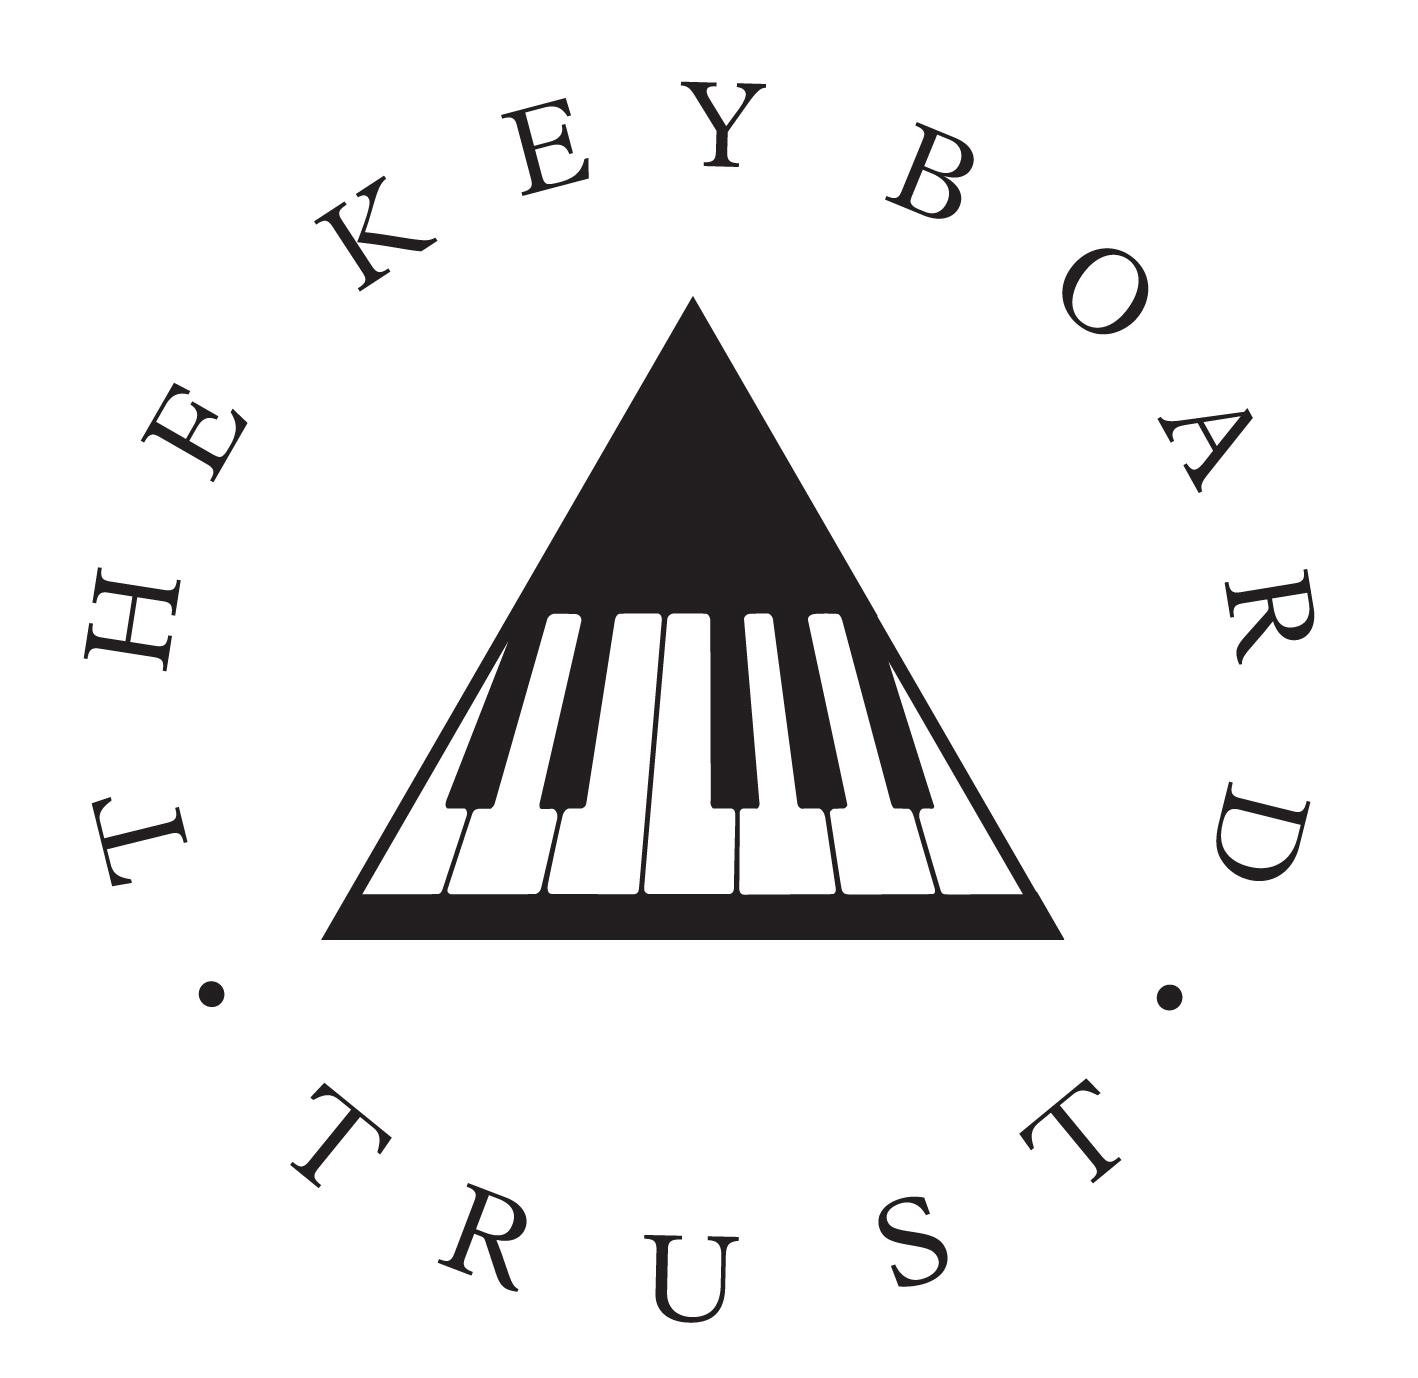 The Keyboard Trust